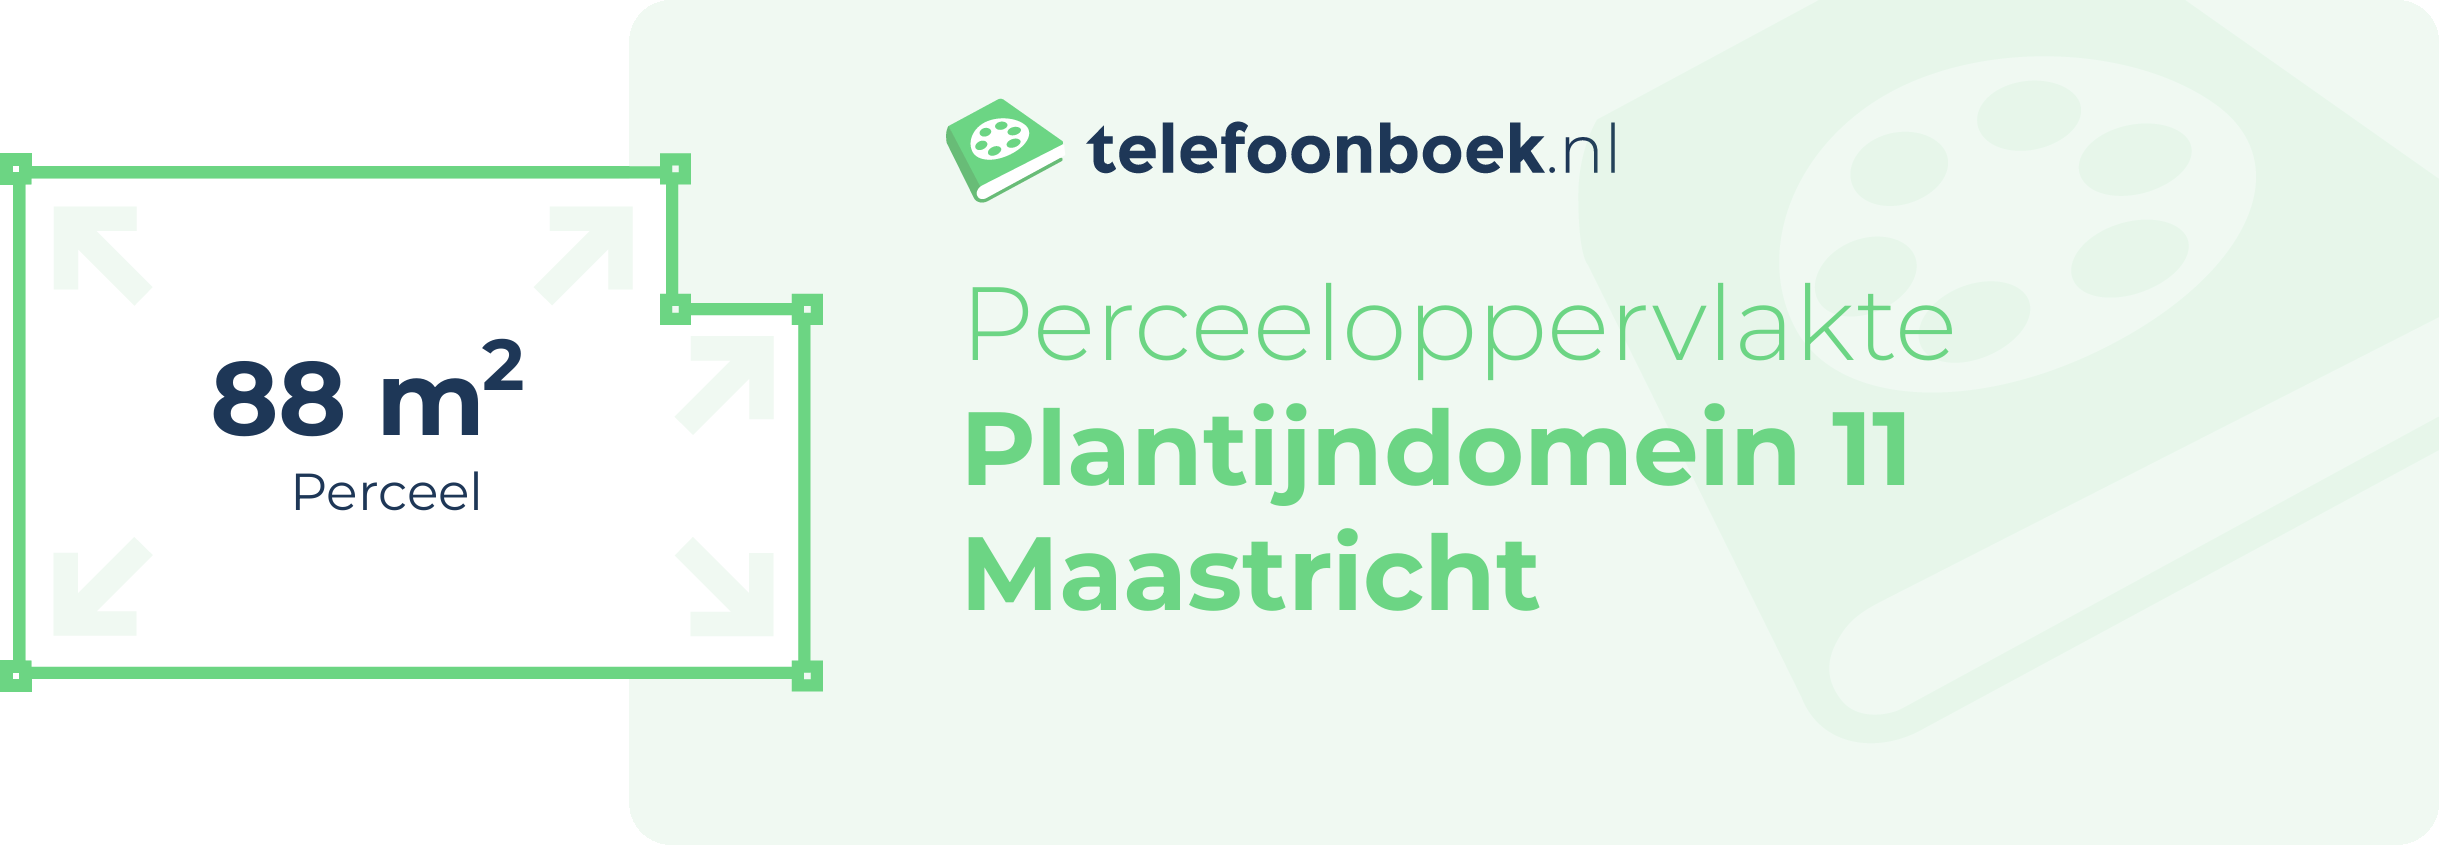 Perceeloppervlakte Plantijndomein 11 Maastricht